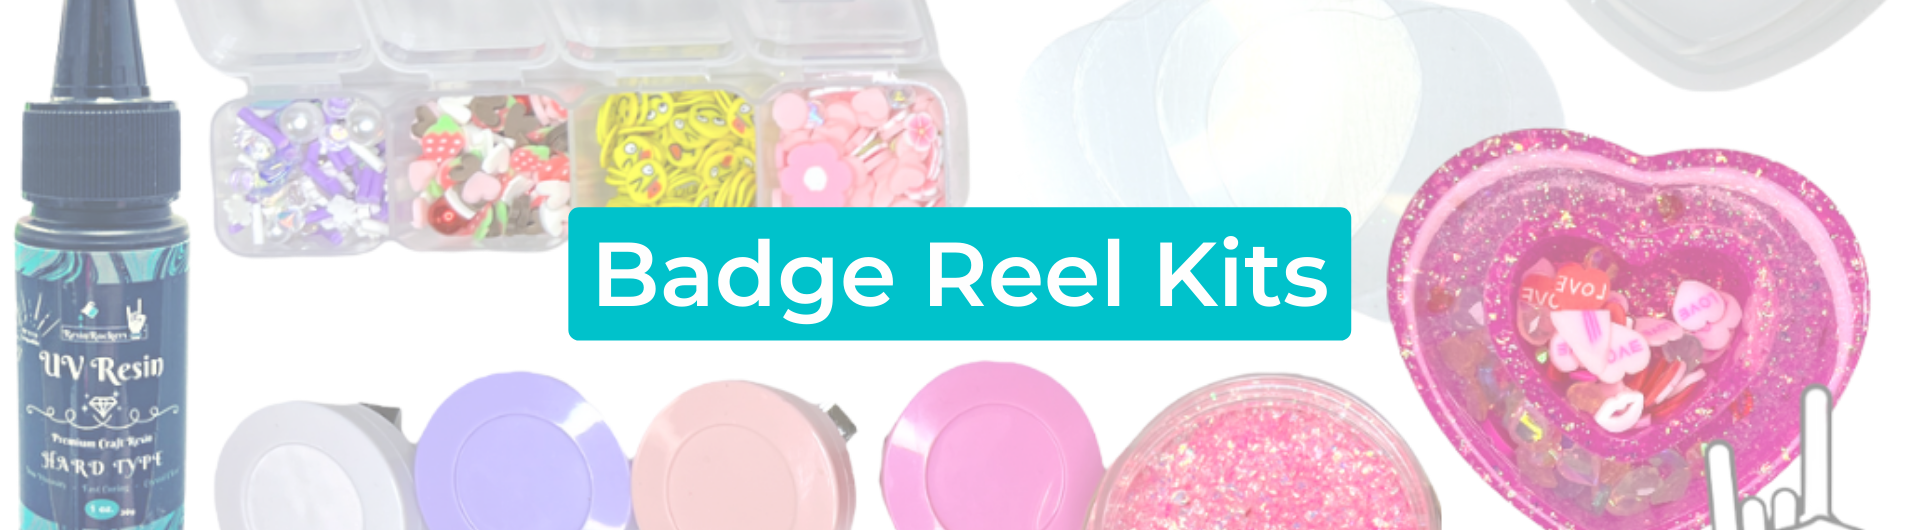 Badge Reel Kits - Resin Rockers